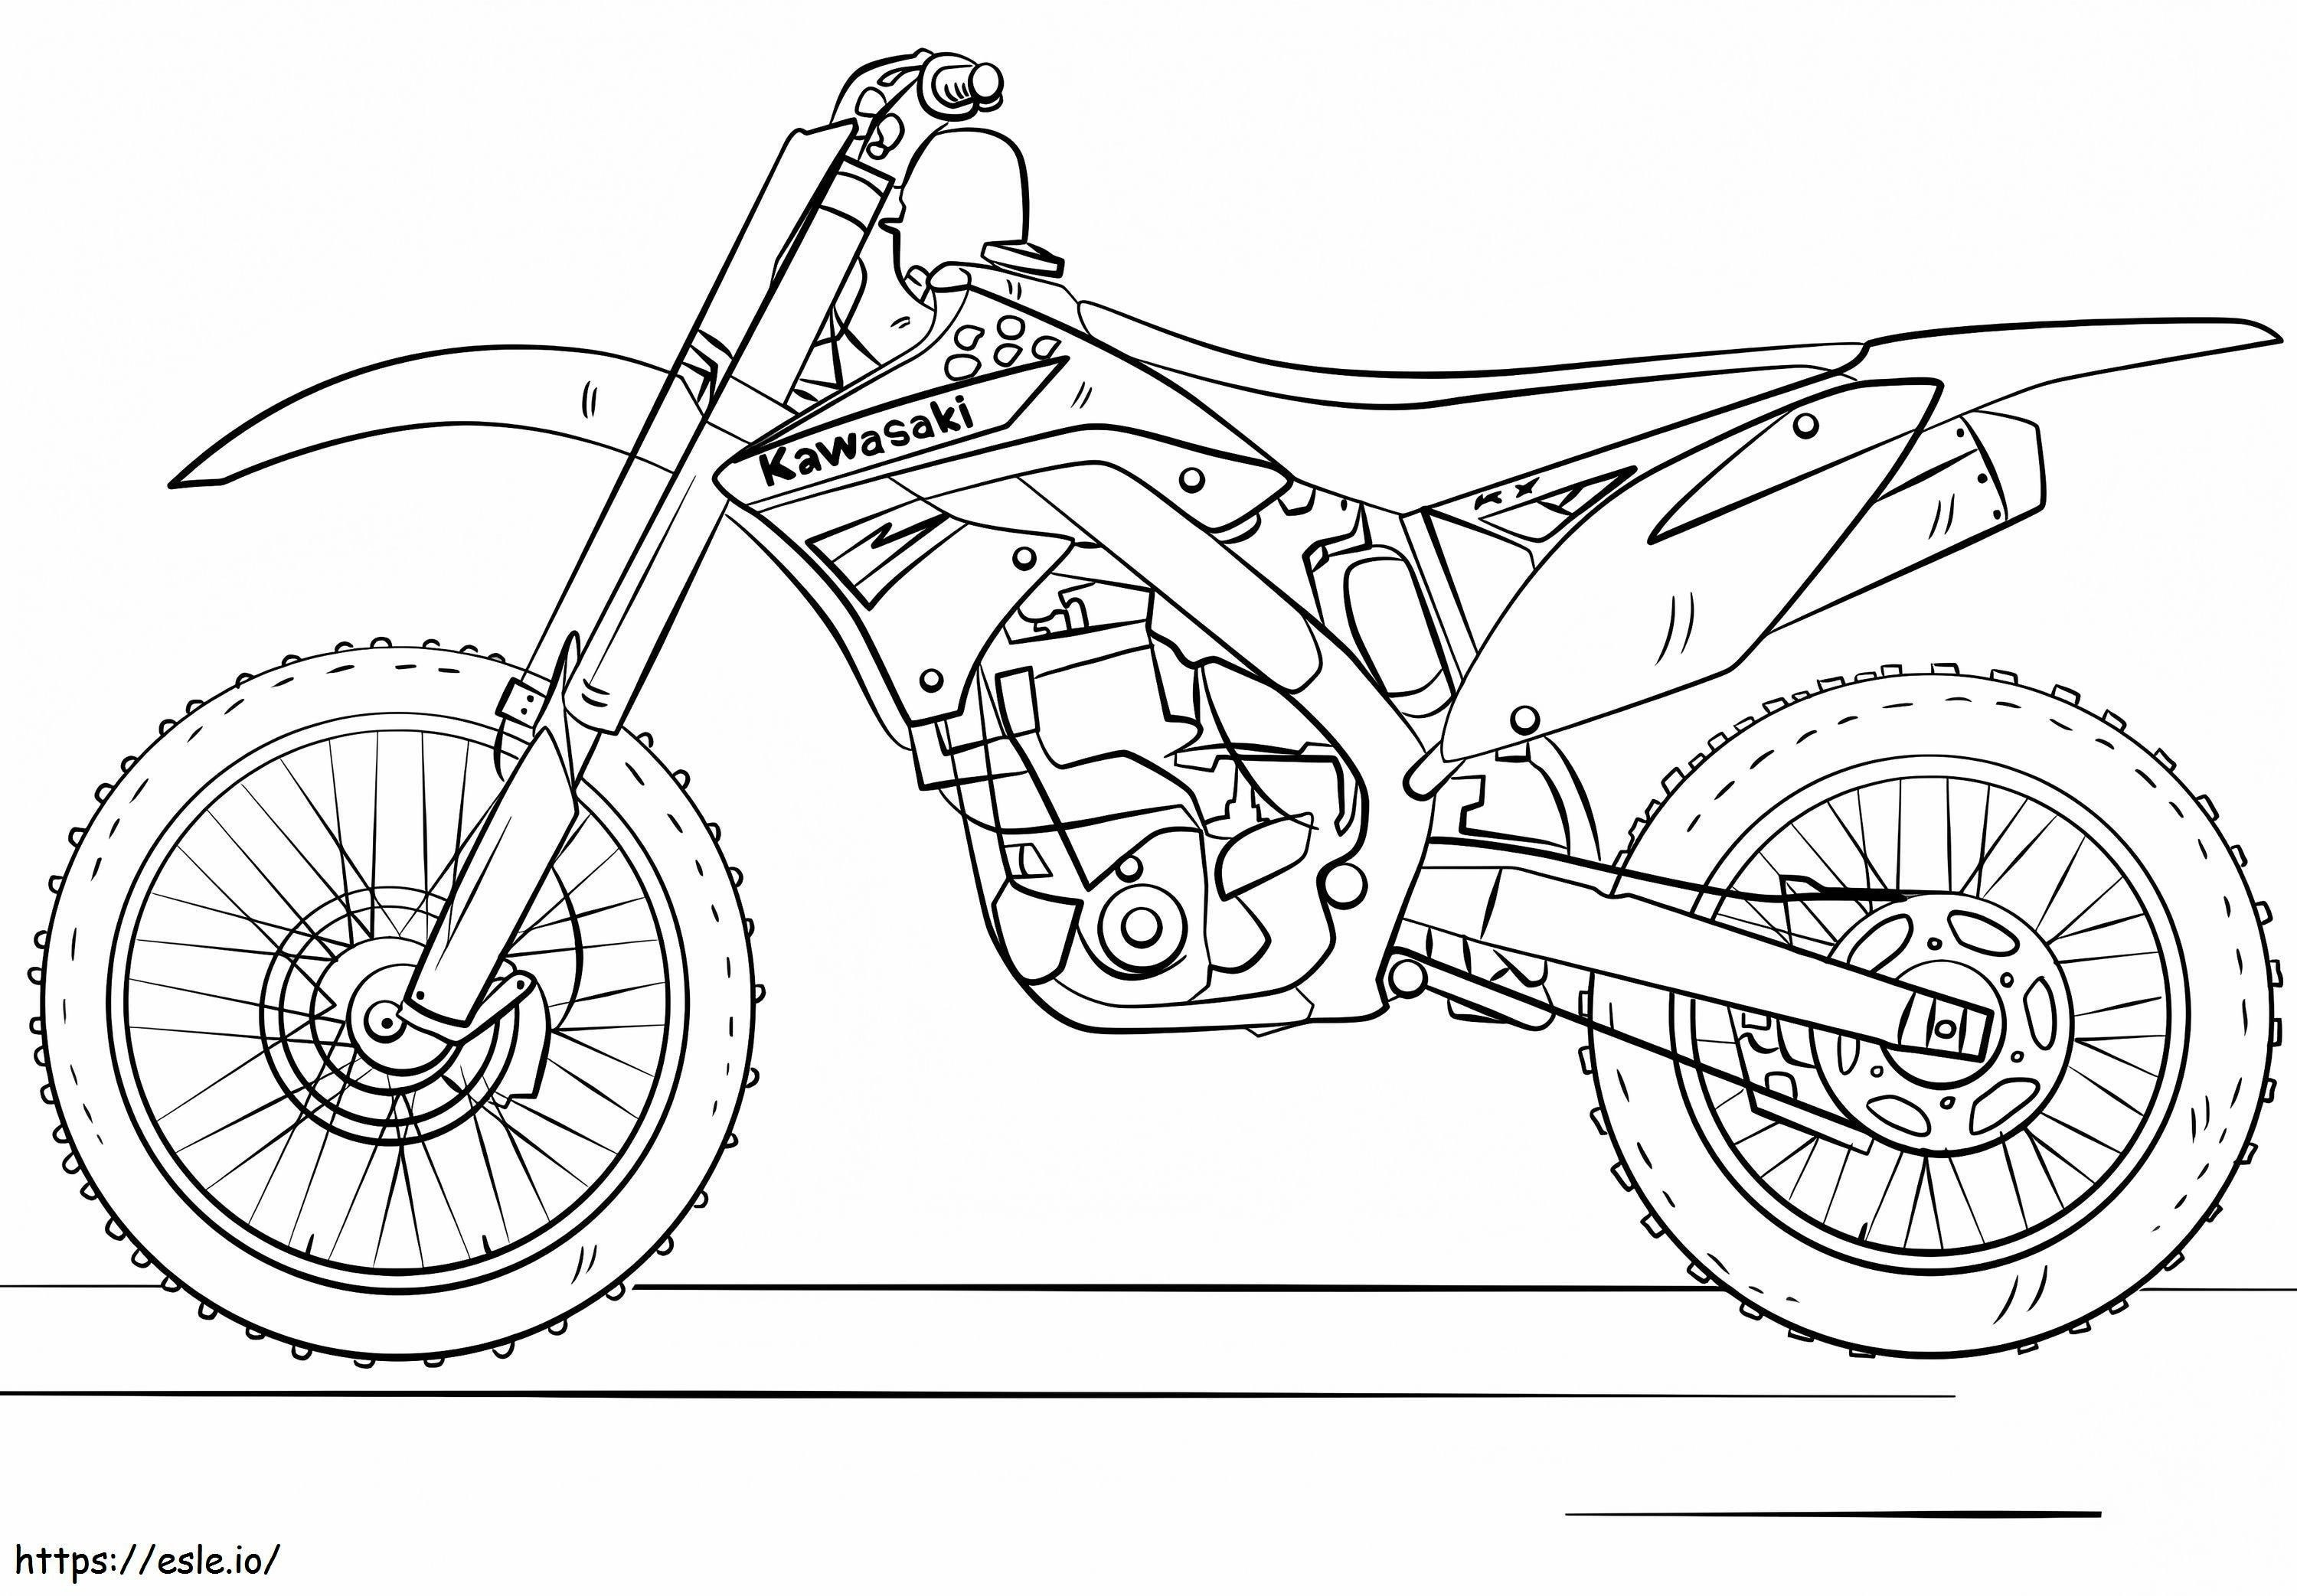 Sepeda Motocross Kawasaki Gambar Mewarnai